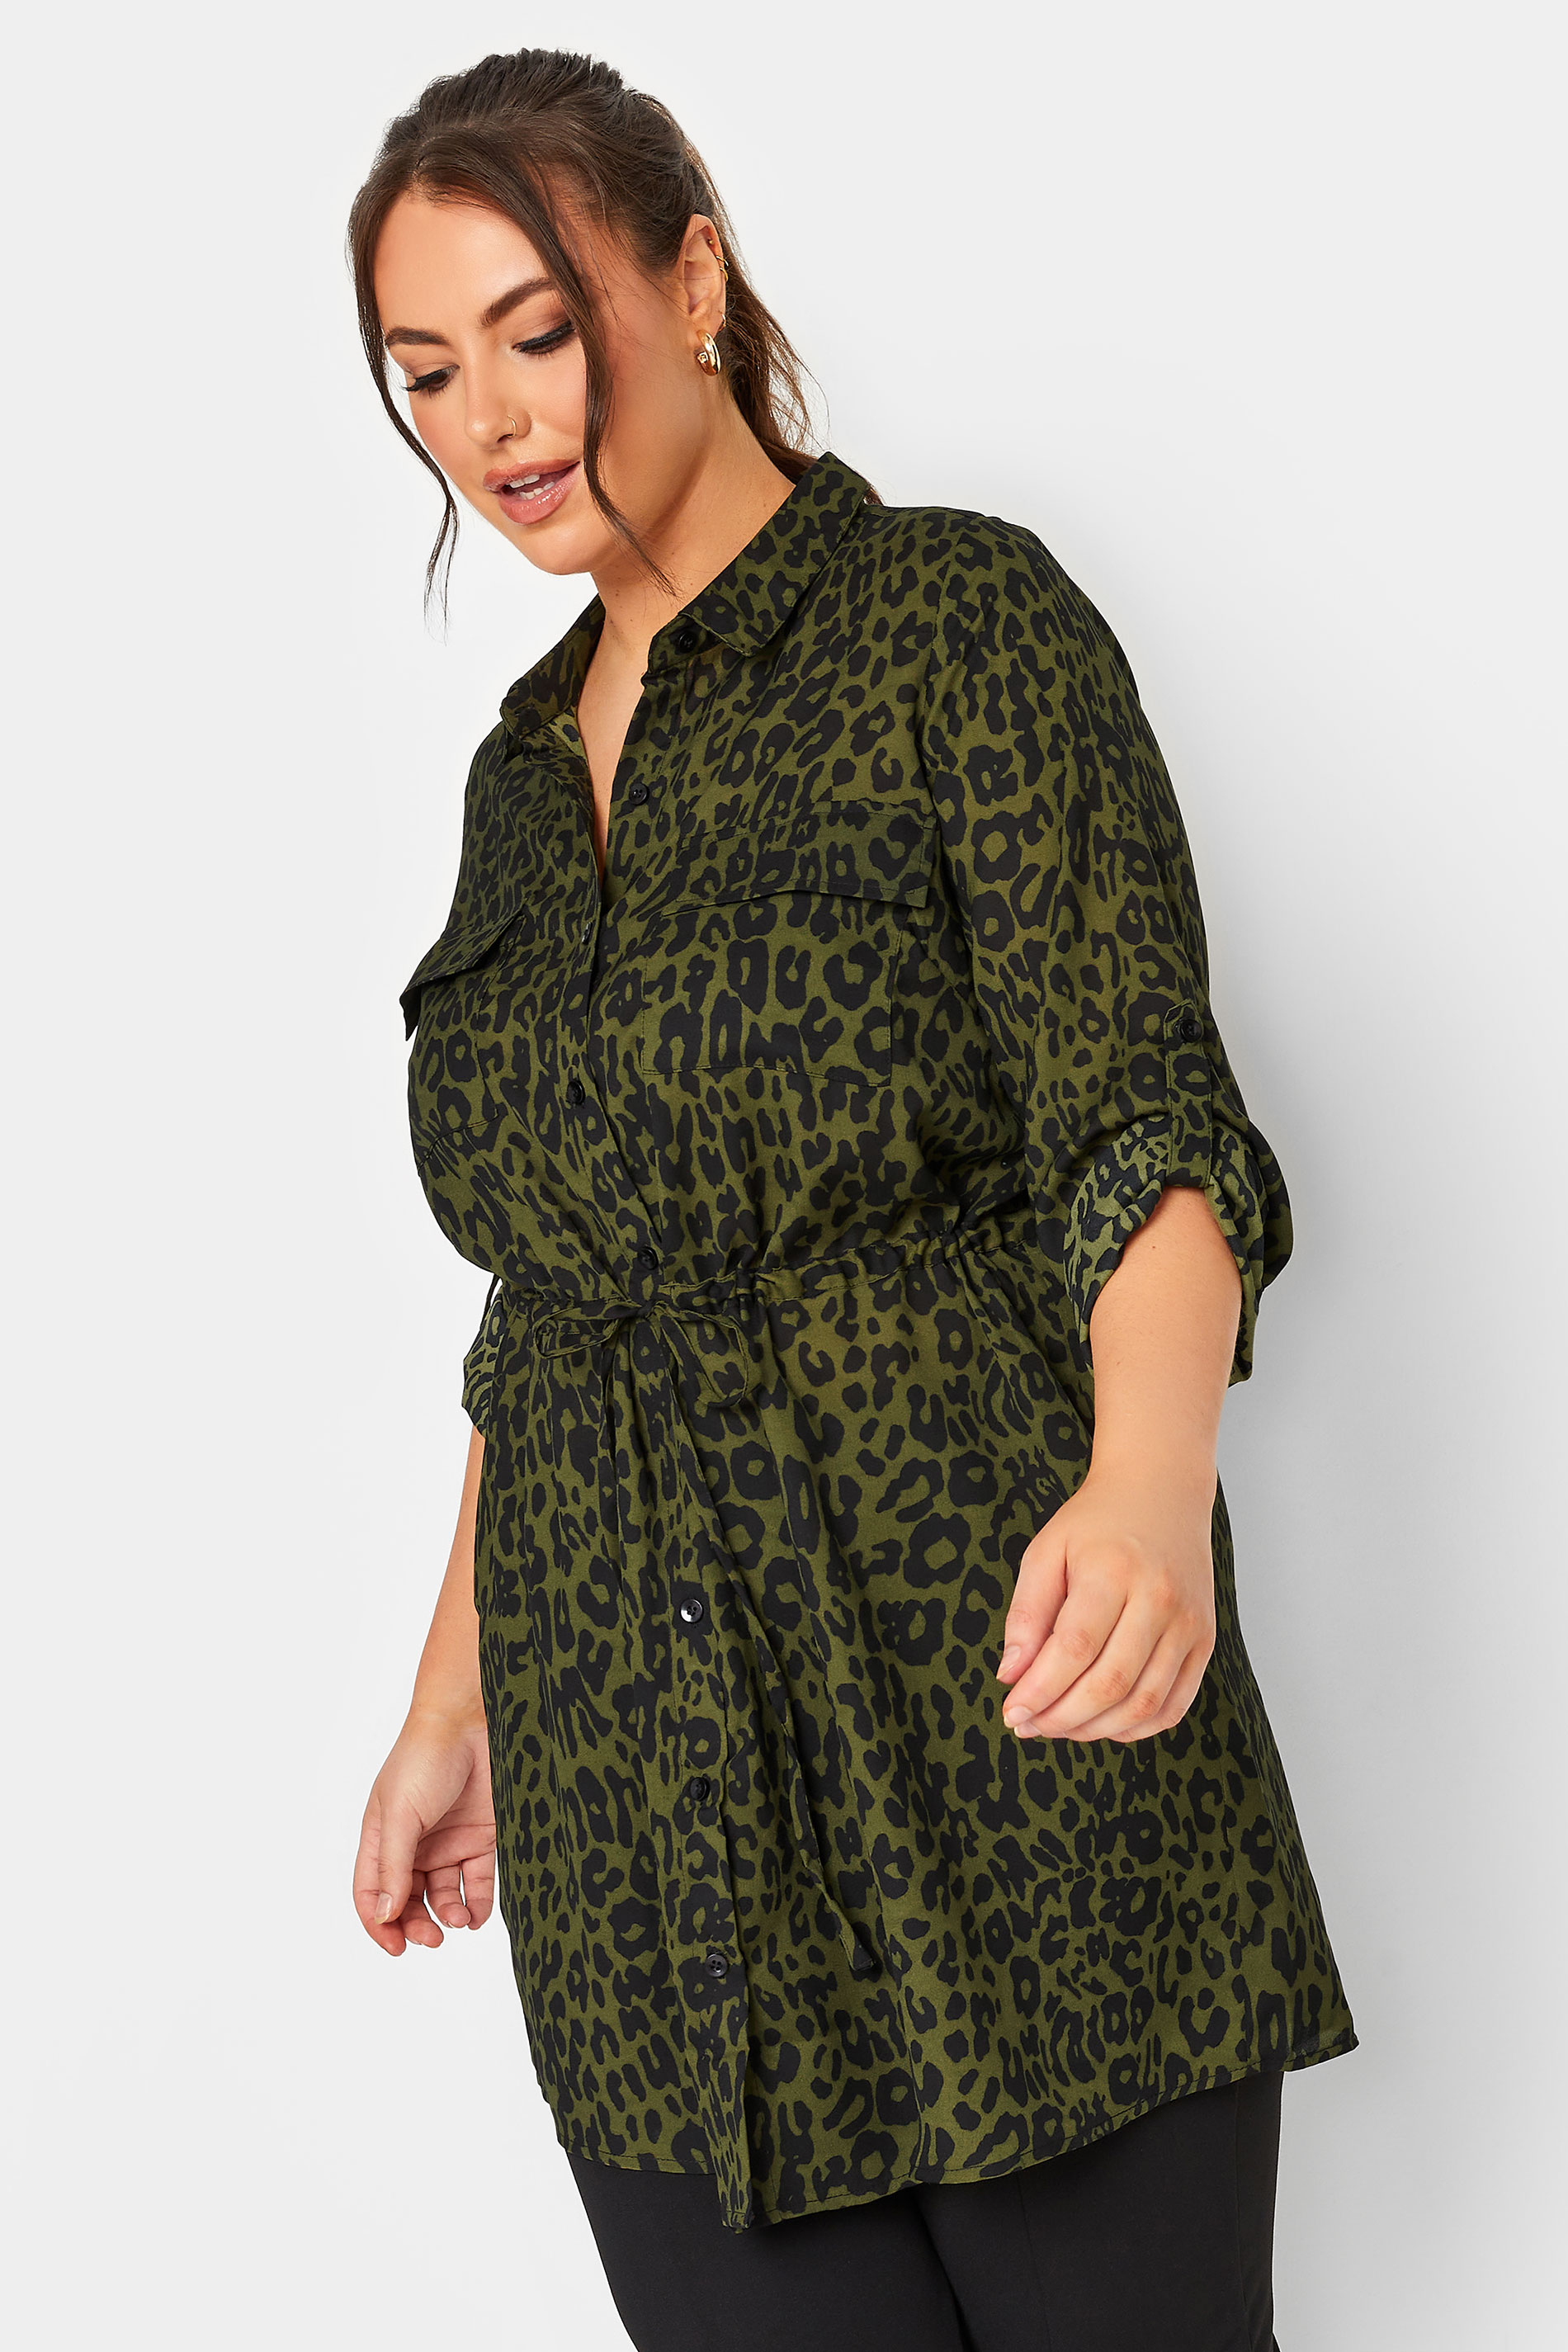 YOURS Plus Size Khaki Green Animal Print Utility Tunic Shirt | Yours Clothing 2